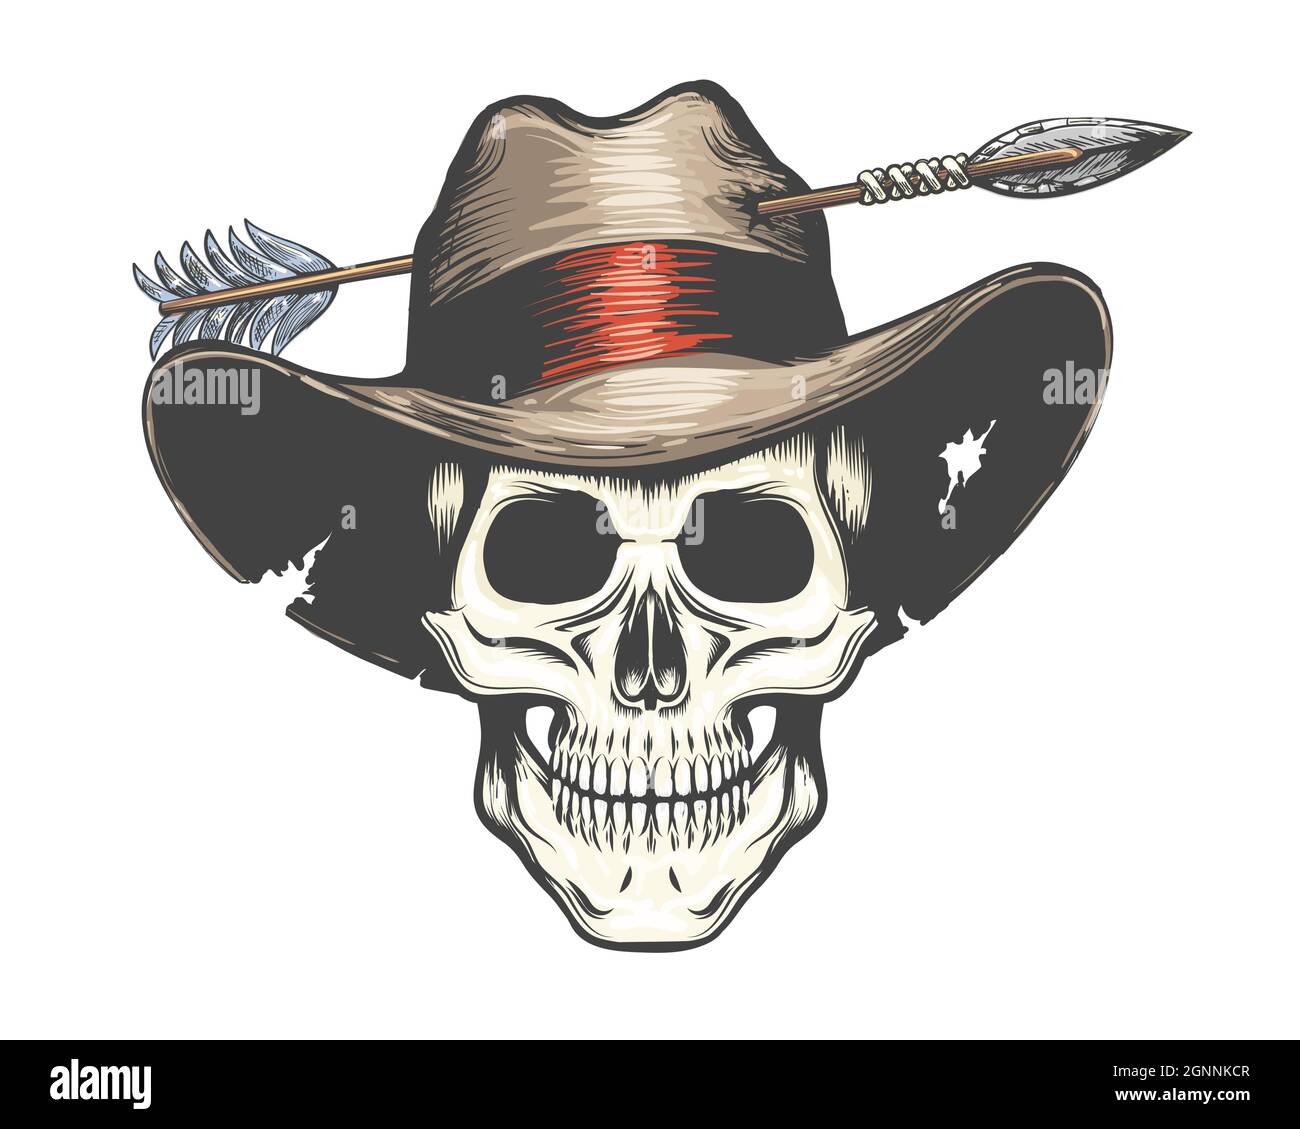 Cowboy hat Stock Vector Images - Alamy